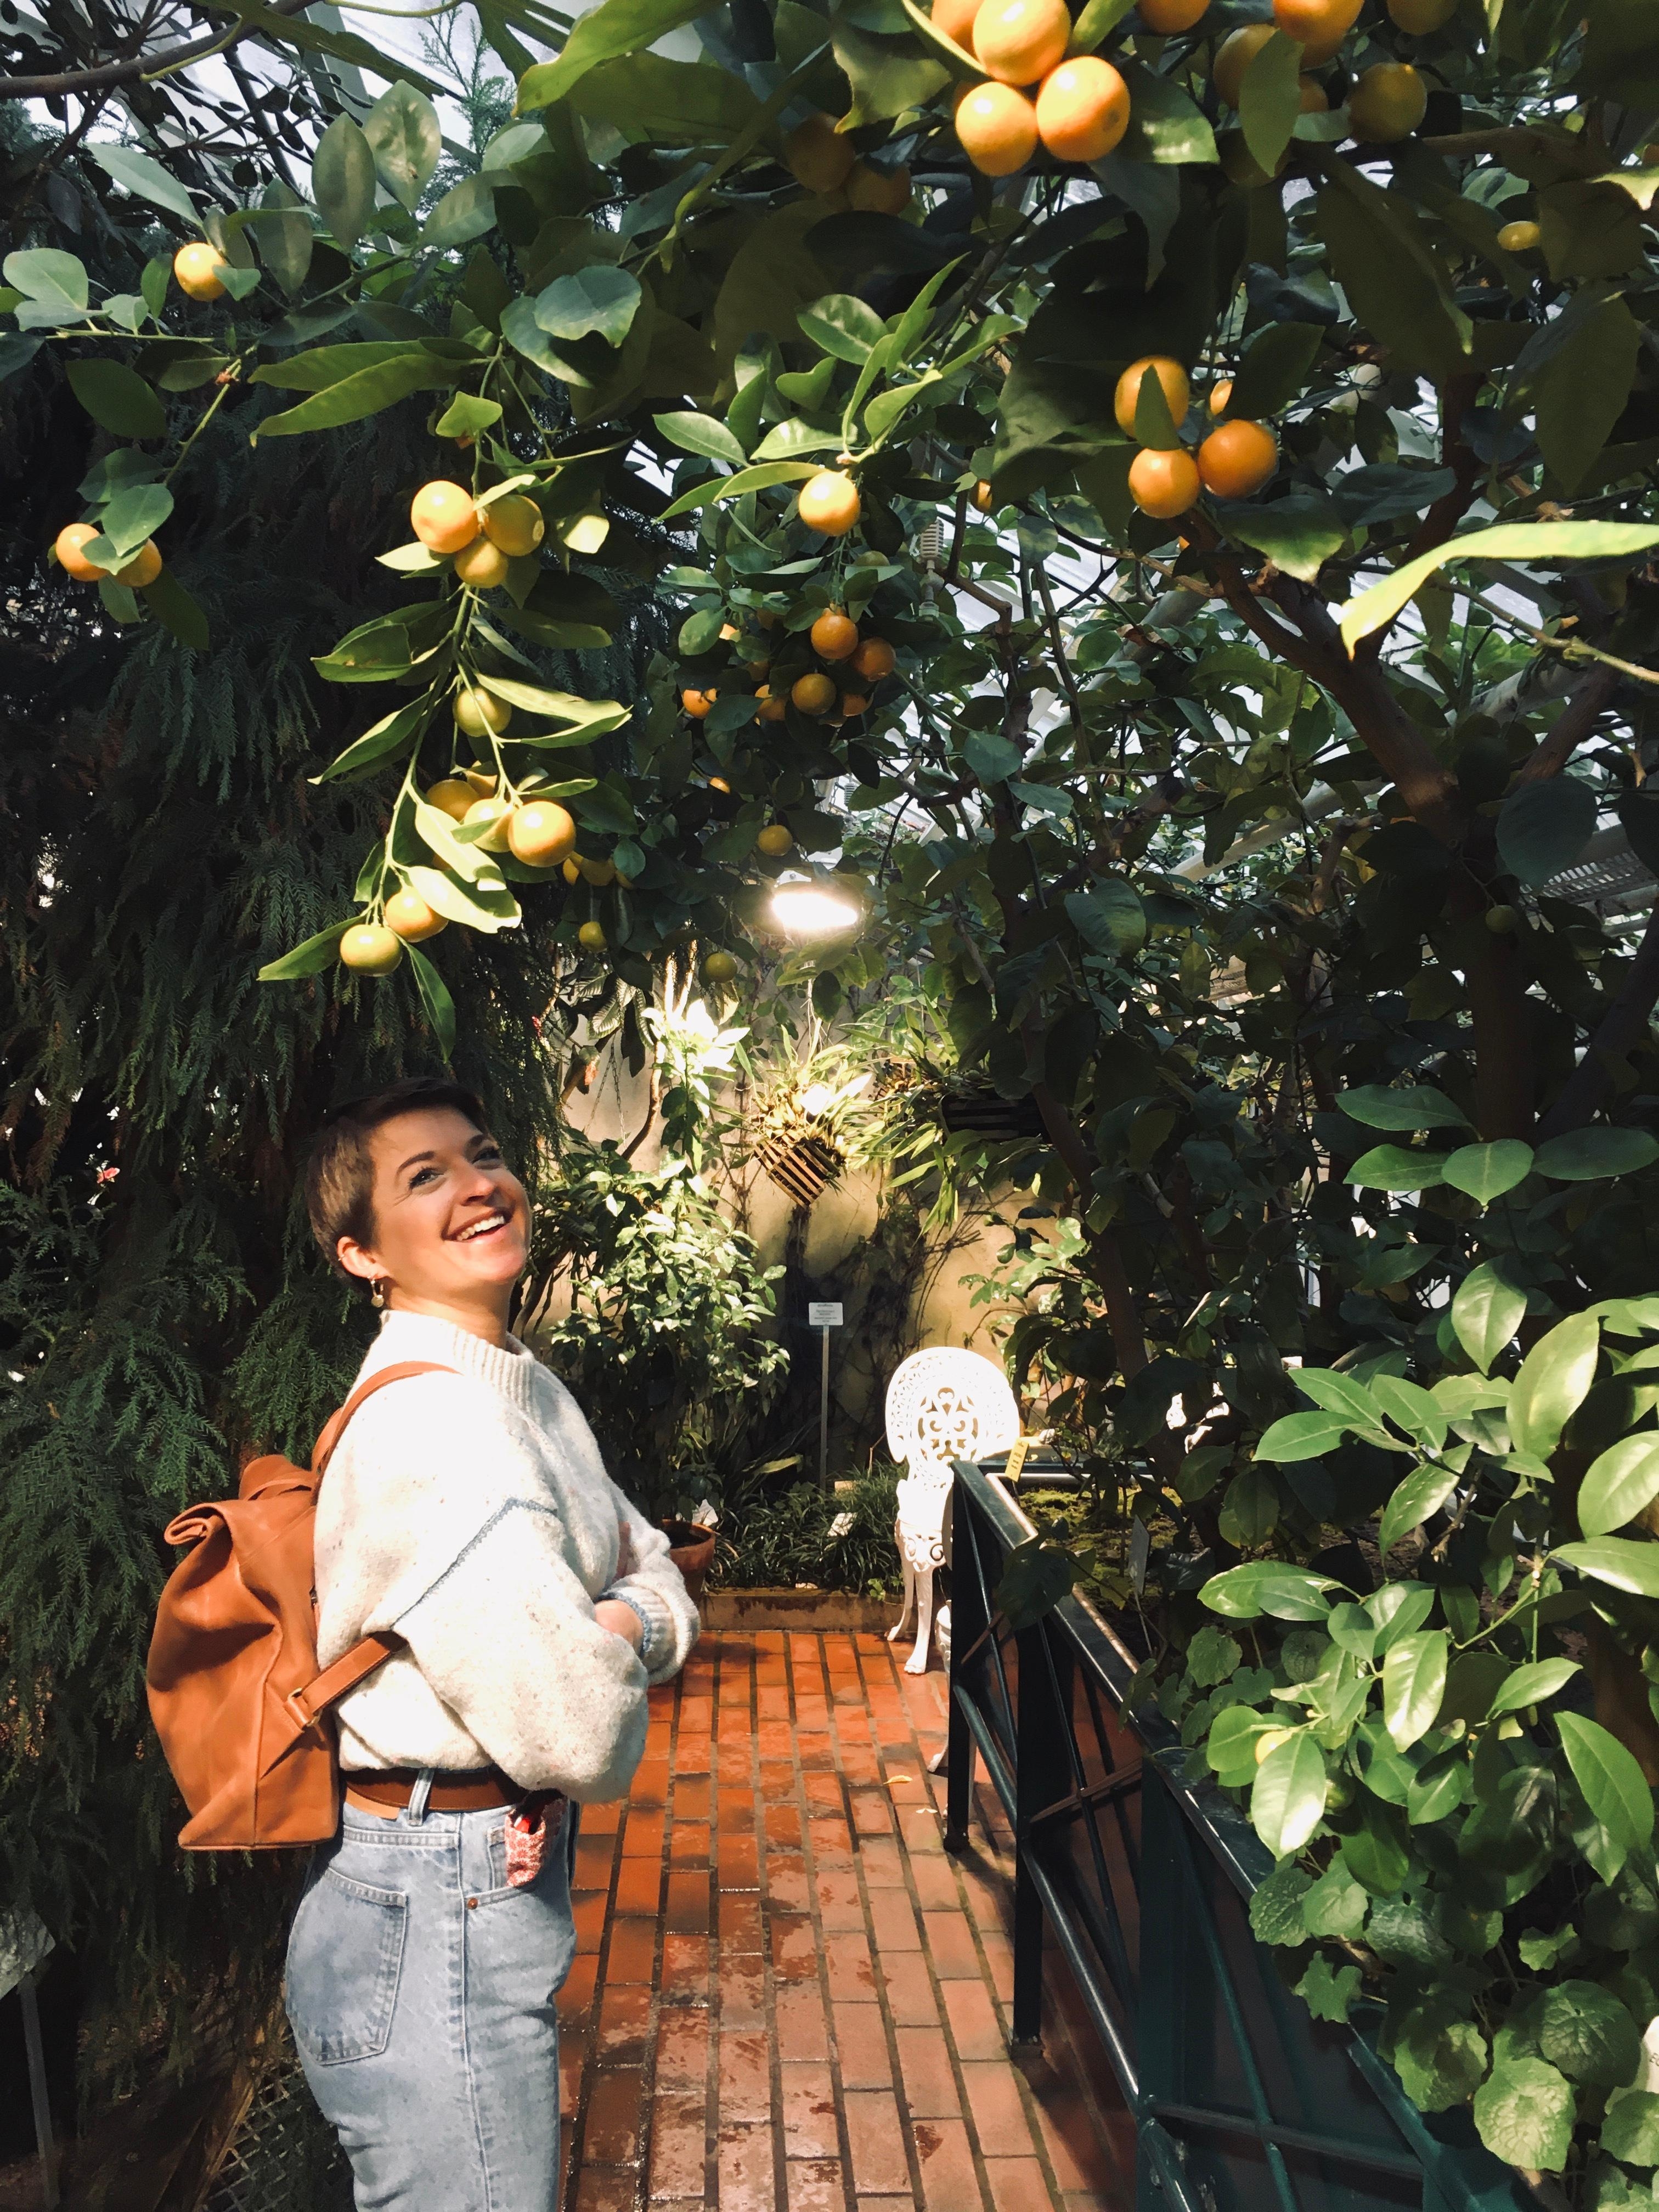 Good vibes only 🍋🍊
#happynewweek #orangerie #botanicalgarden 